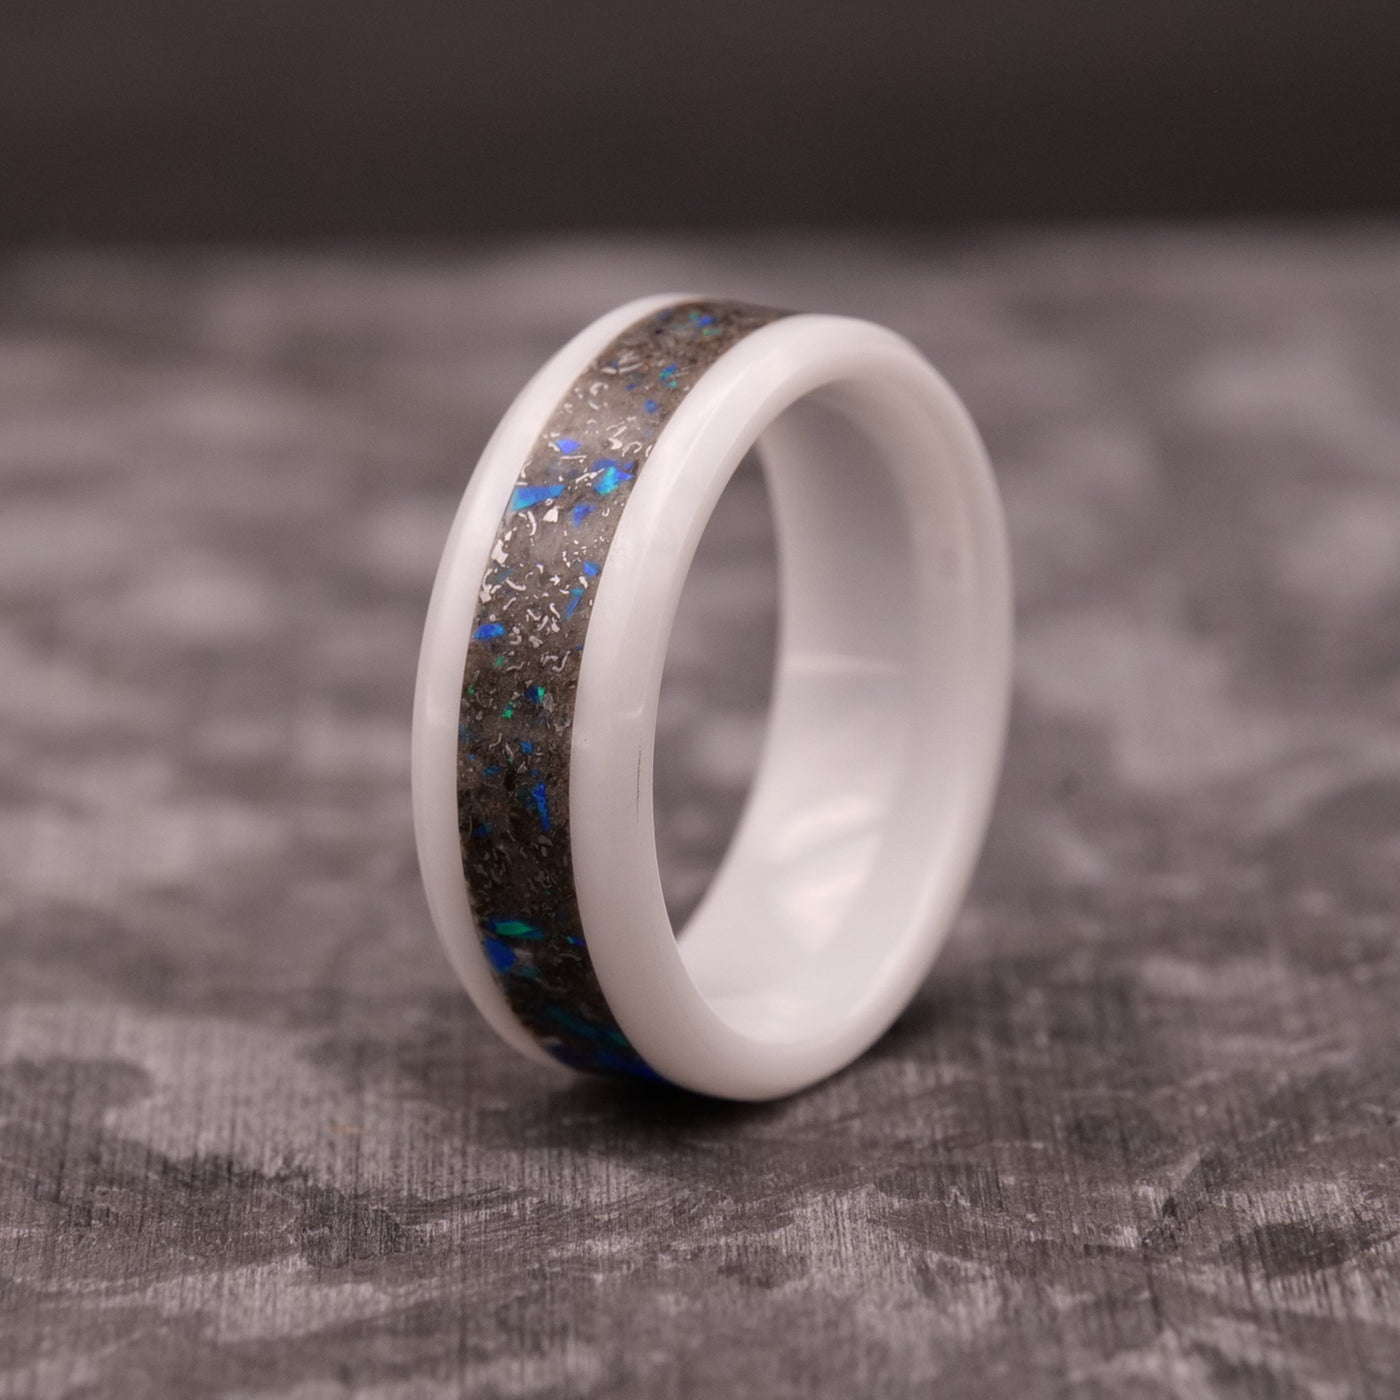 Star Dust™ Ring in White Ceramic - Patrick Adair Designs